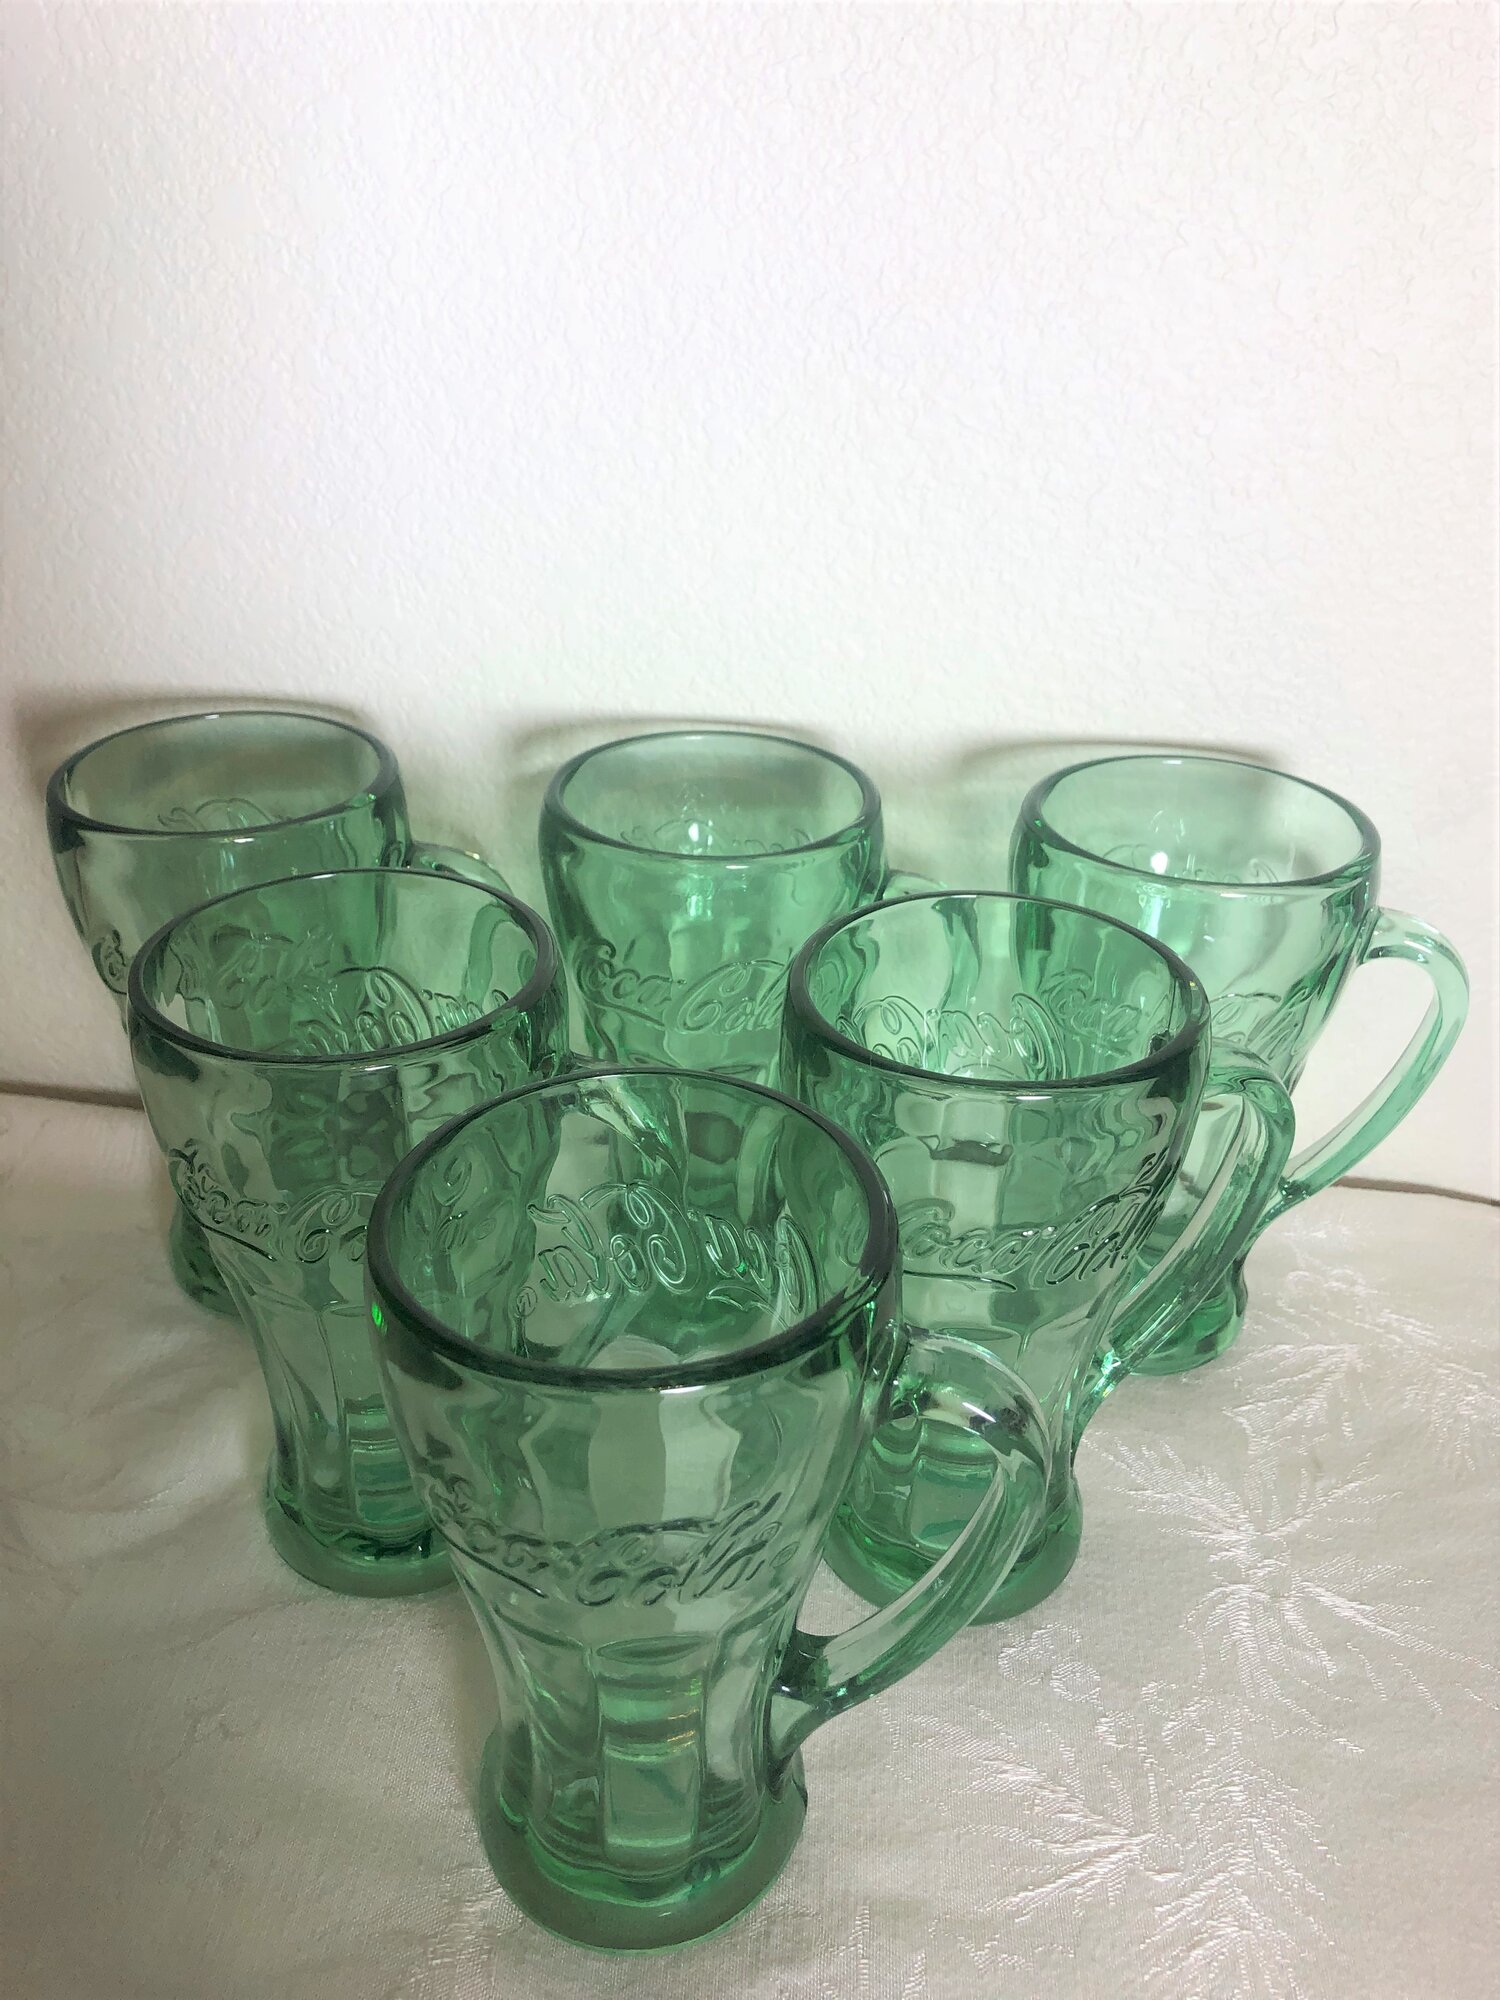 Set of five vintage Libby Irish Coffee glasses - Drinkware, Facebook  Marketplace